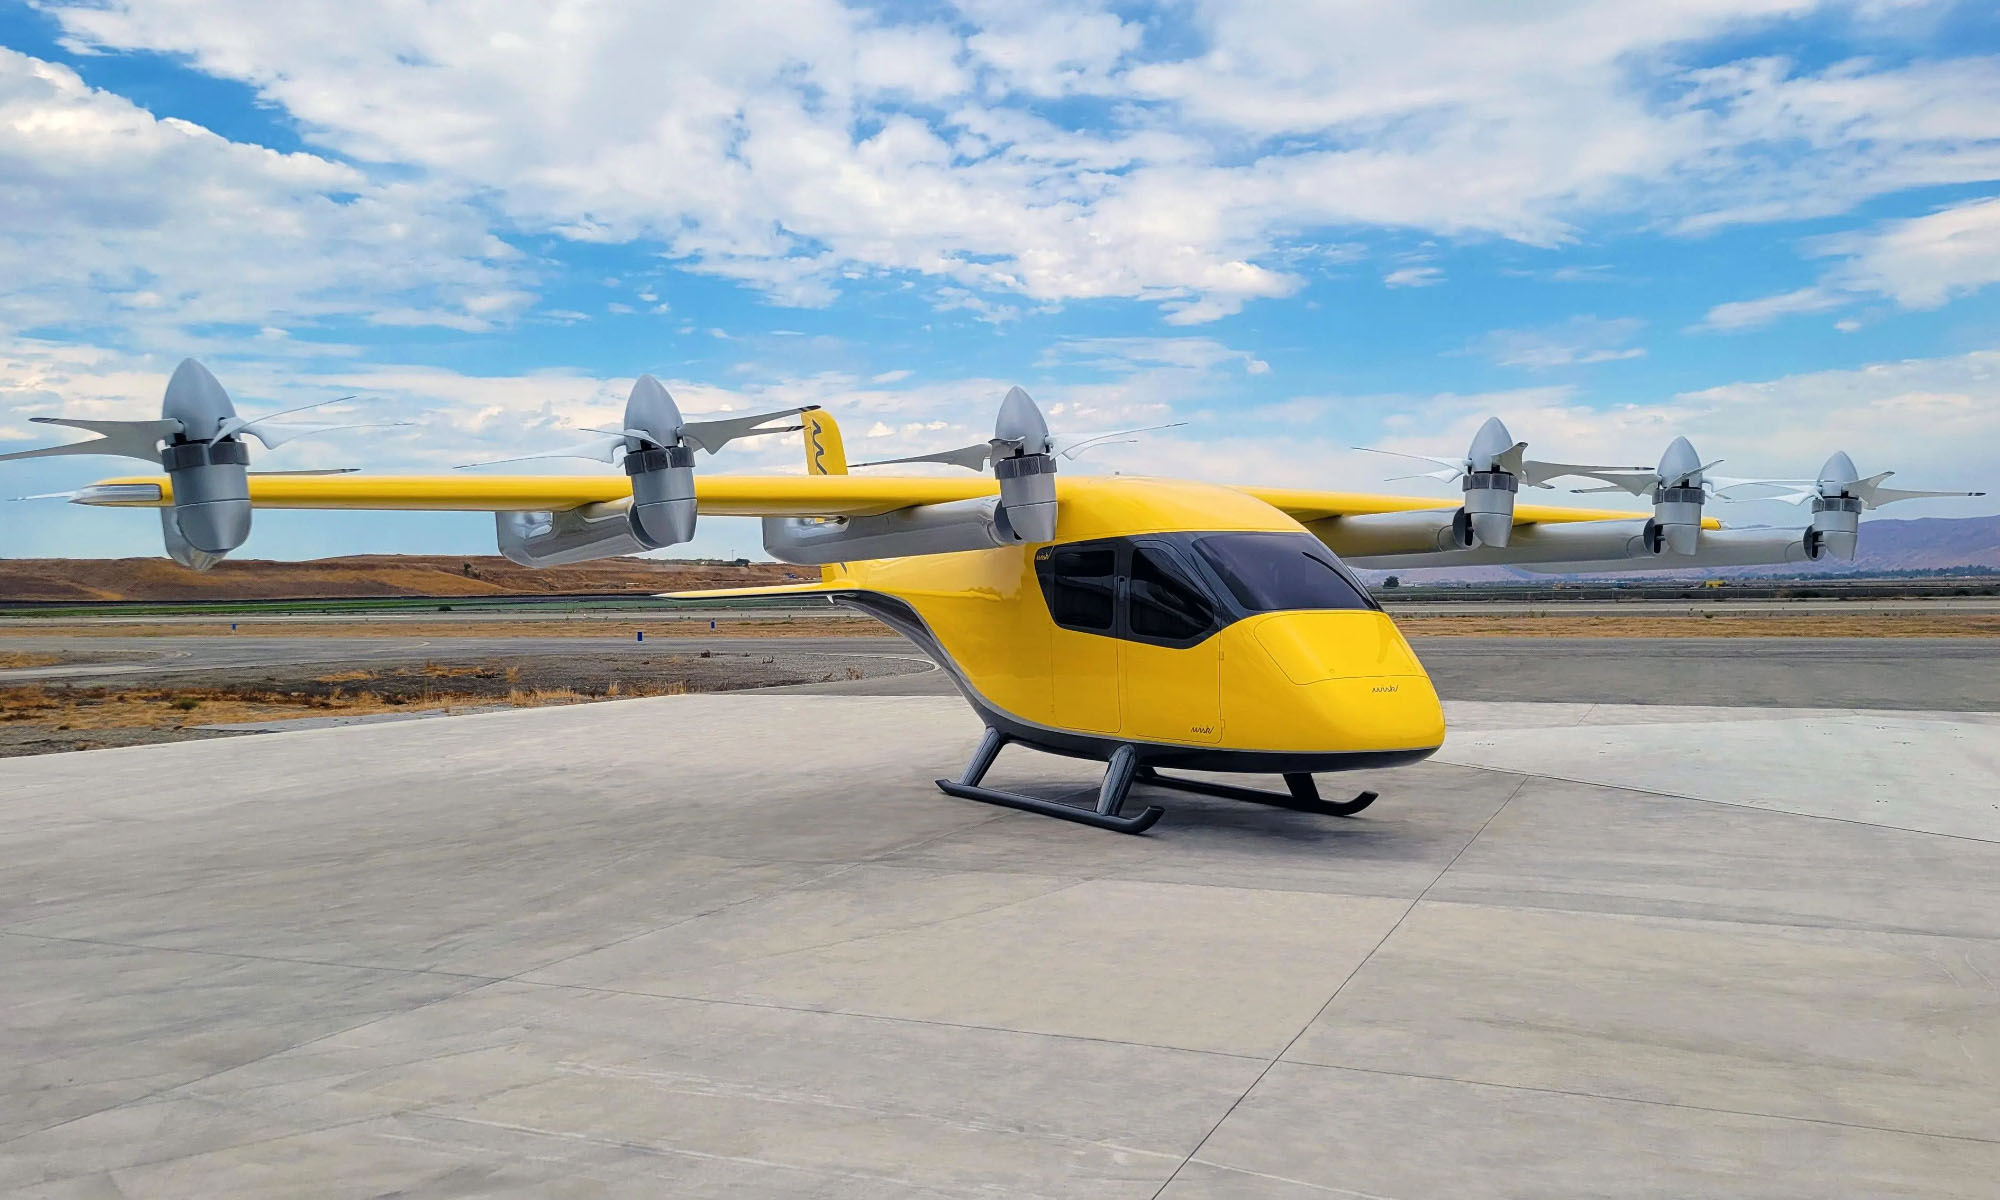 wisk aero unveils four-seat autonomous air taxi